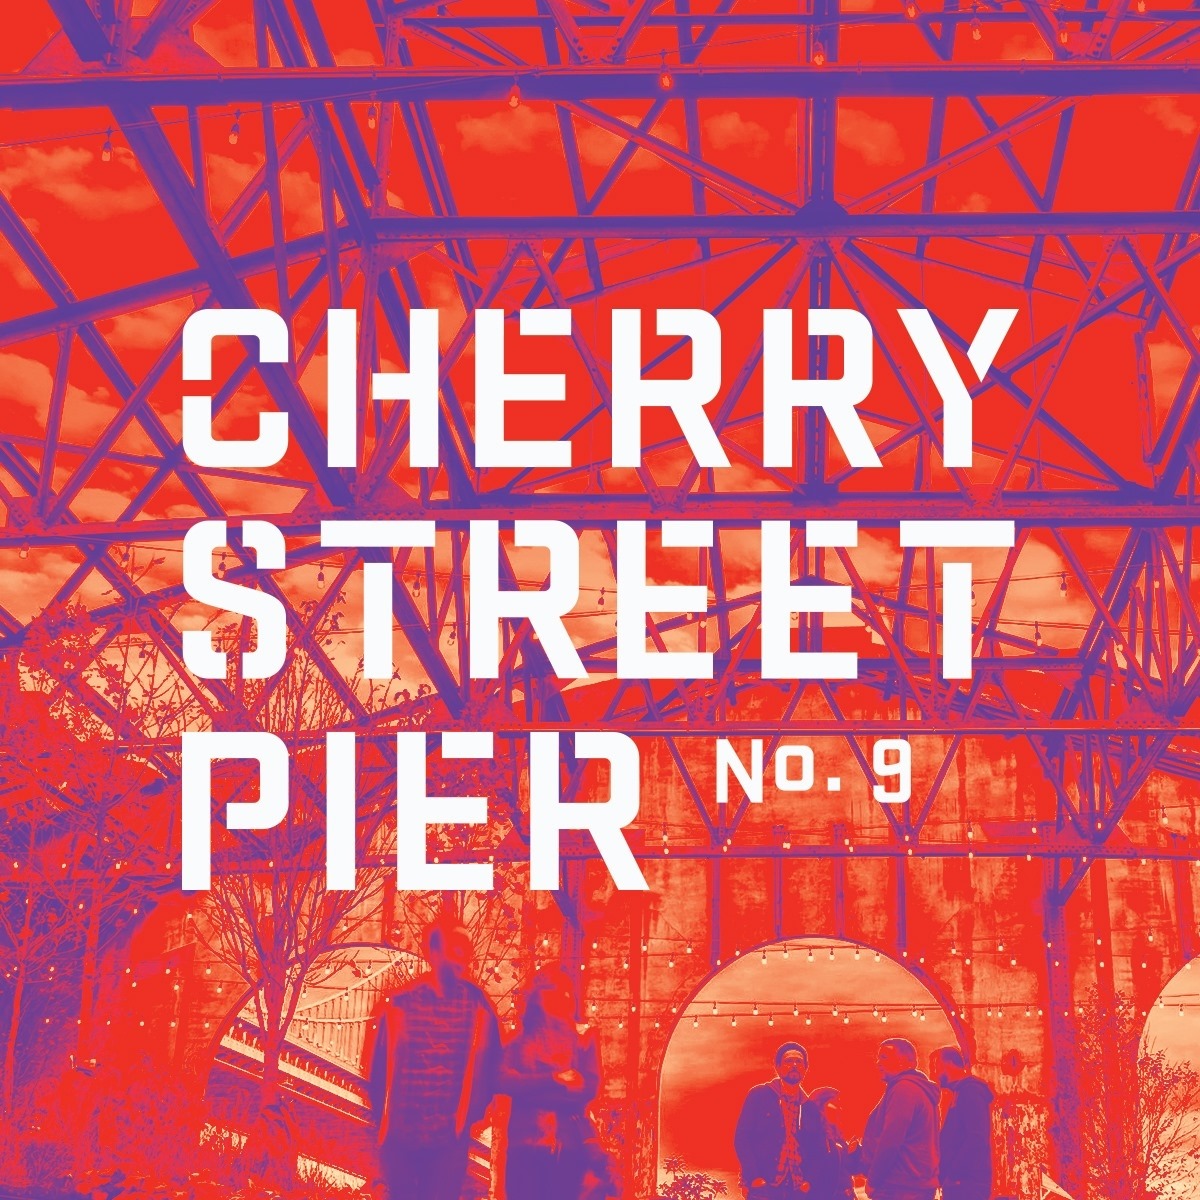 Philly's Love for Yoga - Cherry Street Pier